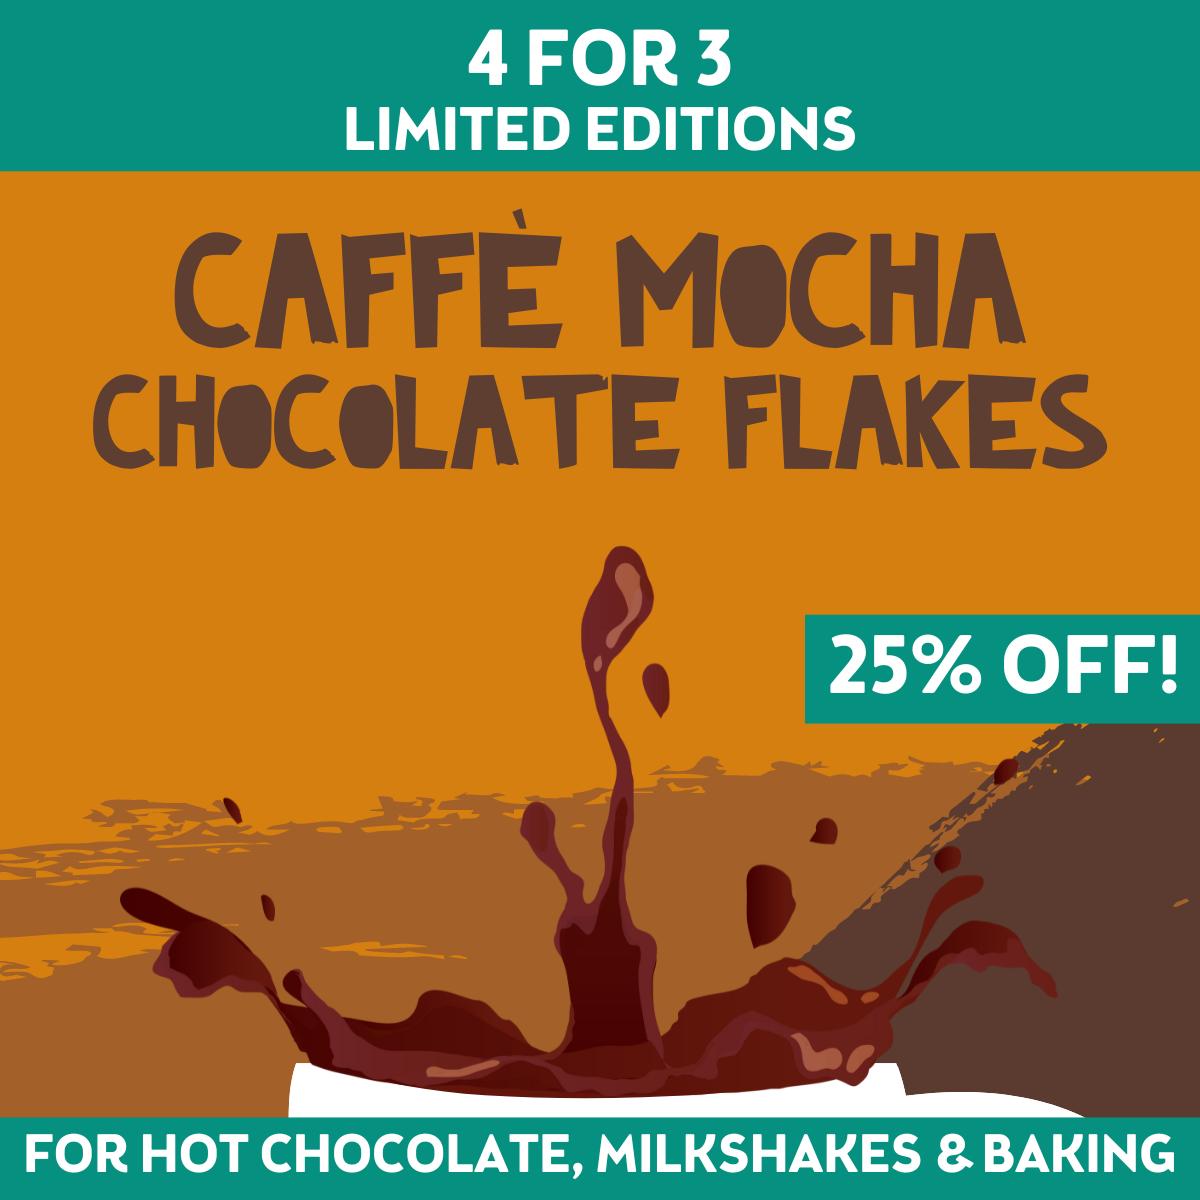 LIMITED EDITION - Caffé Mocha Hot Chocolate